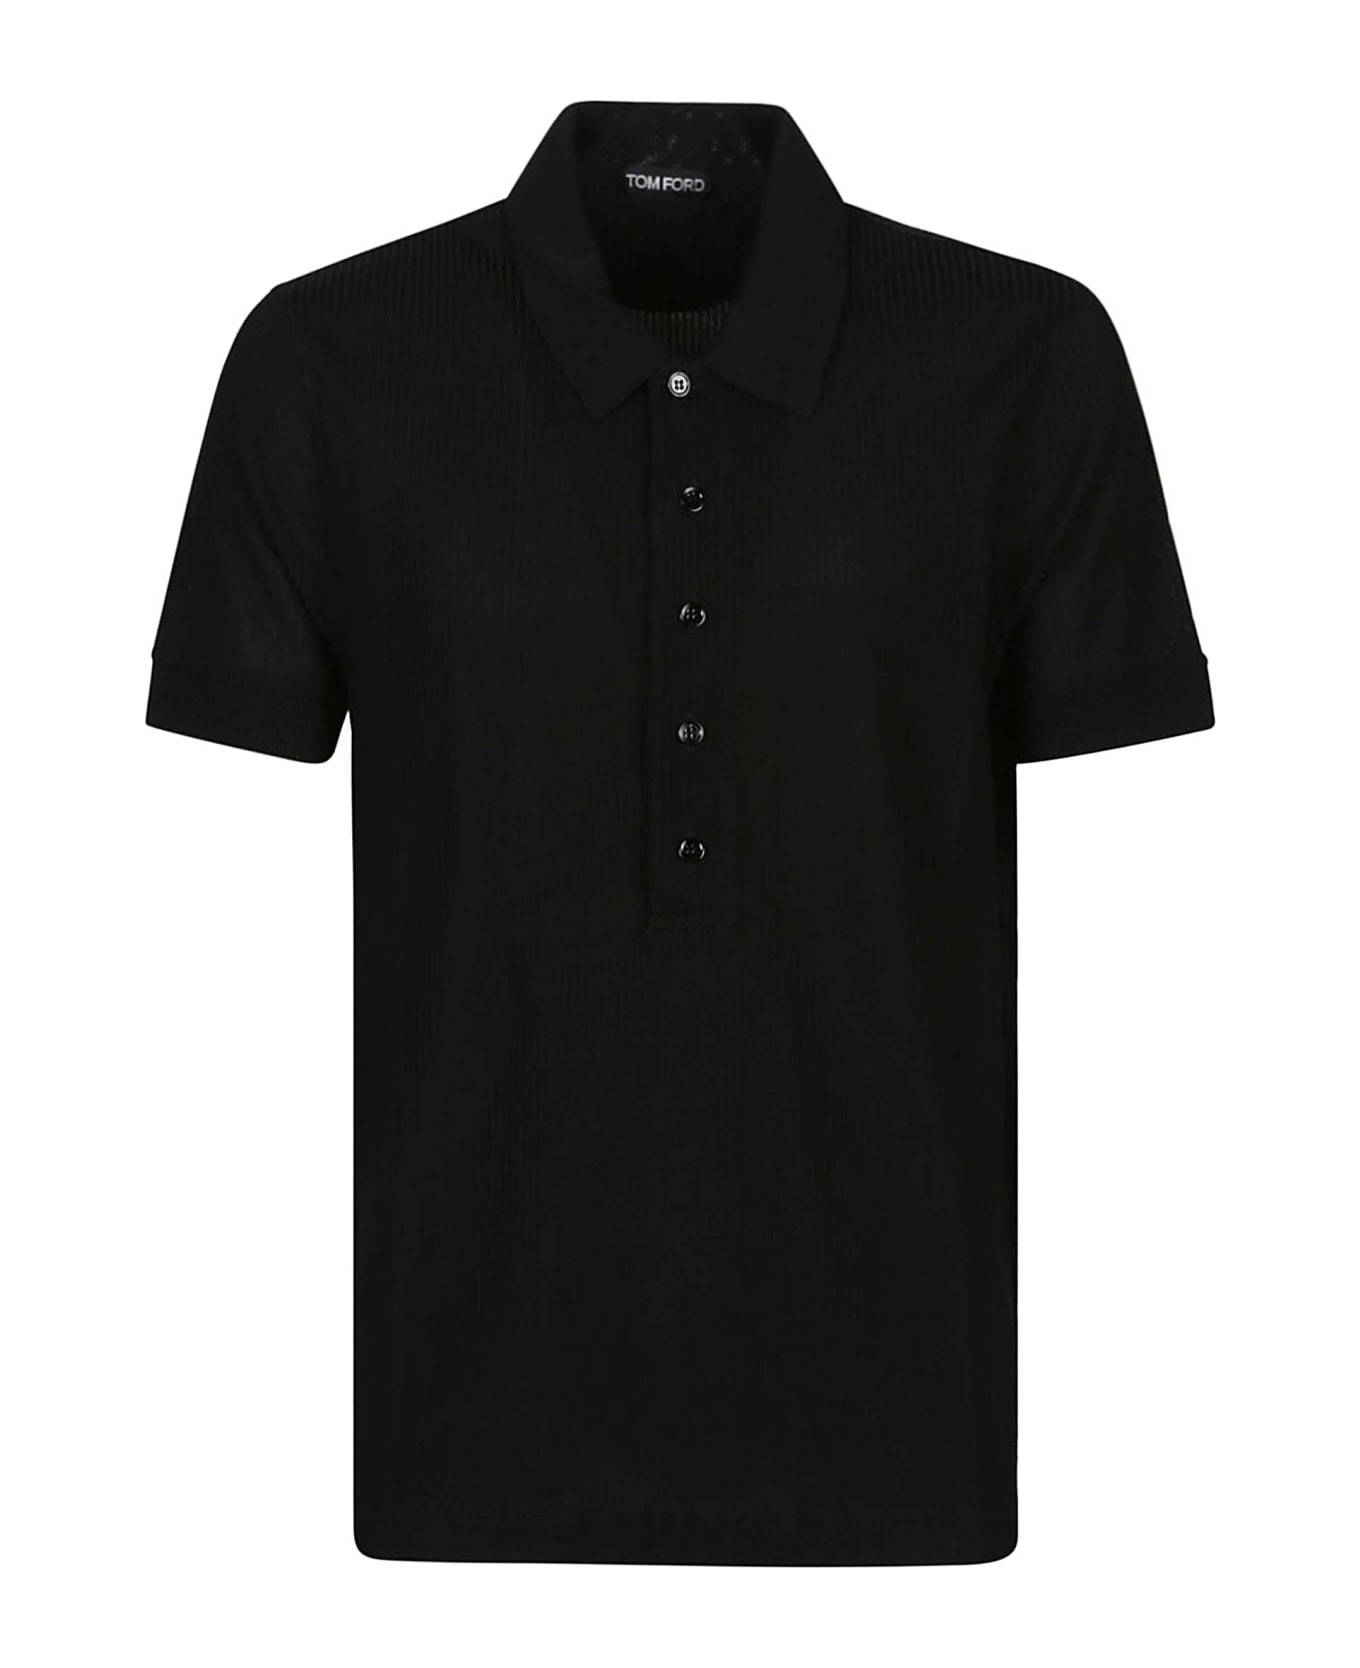 Tom Ford Short Sleeve Polo Shirt - Black ポロシャツ